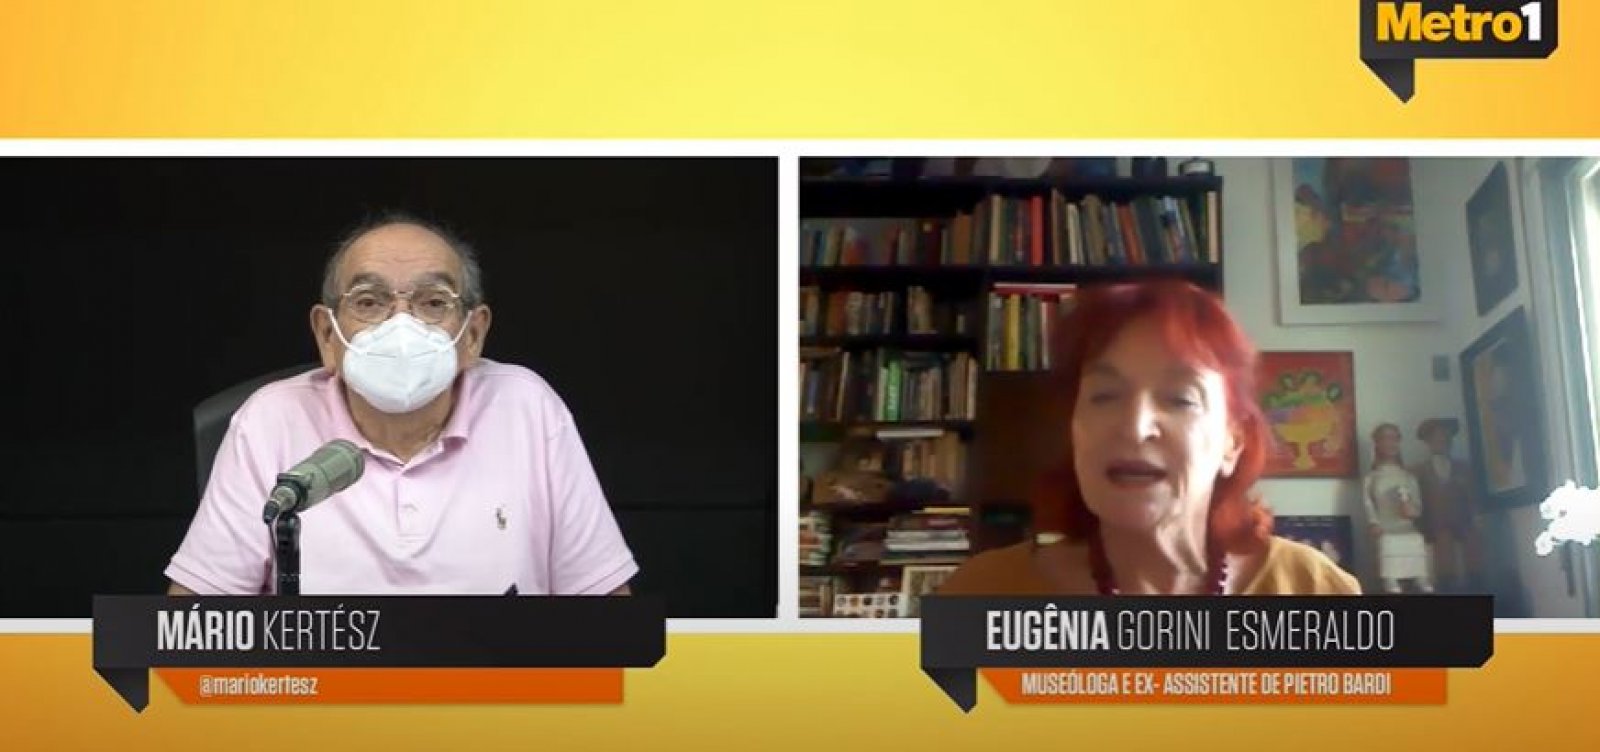 Eugênia Gorini deixa para trás esquecimento e enaltece legado de Pietro Bardi